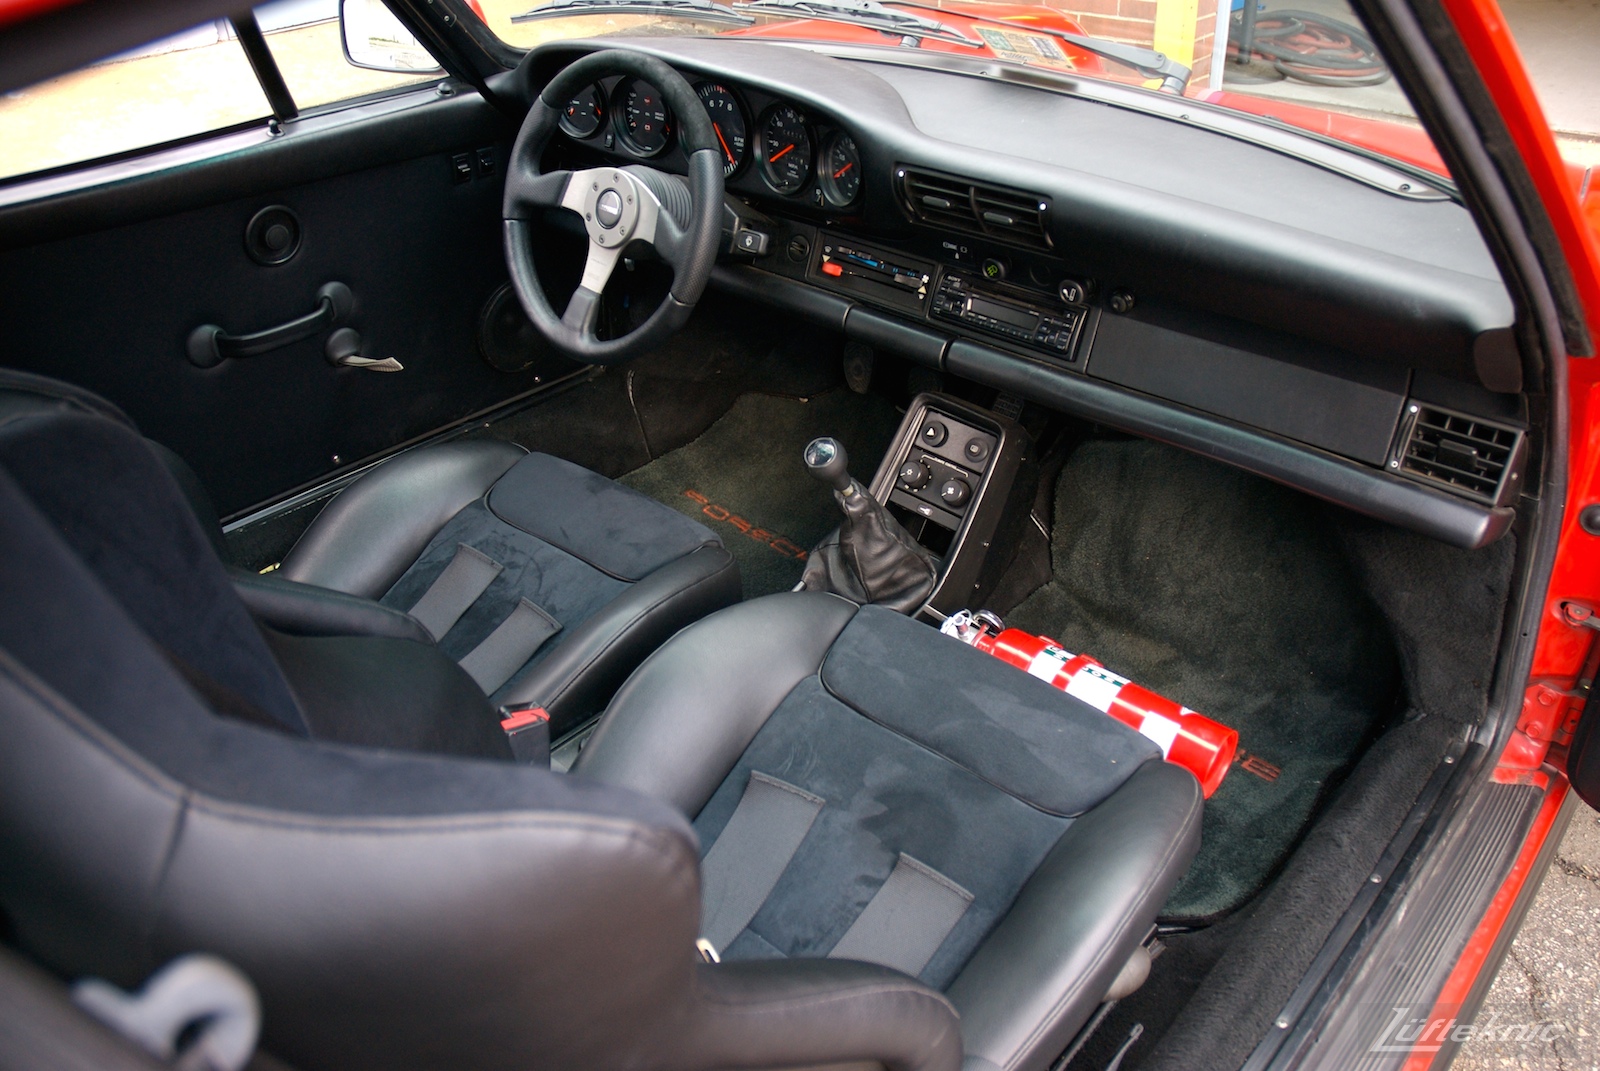 Red Porsche 930 Turbo interior.